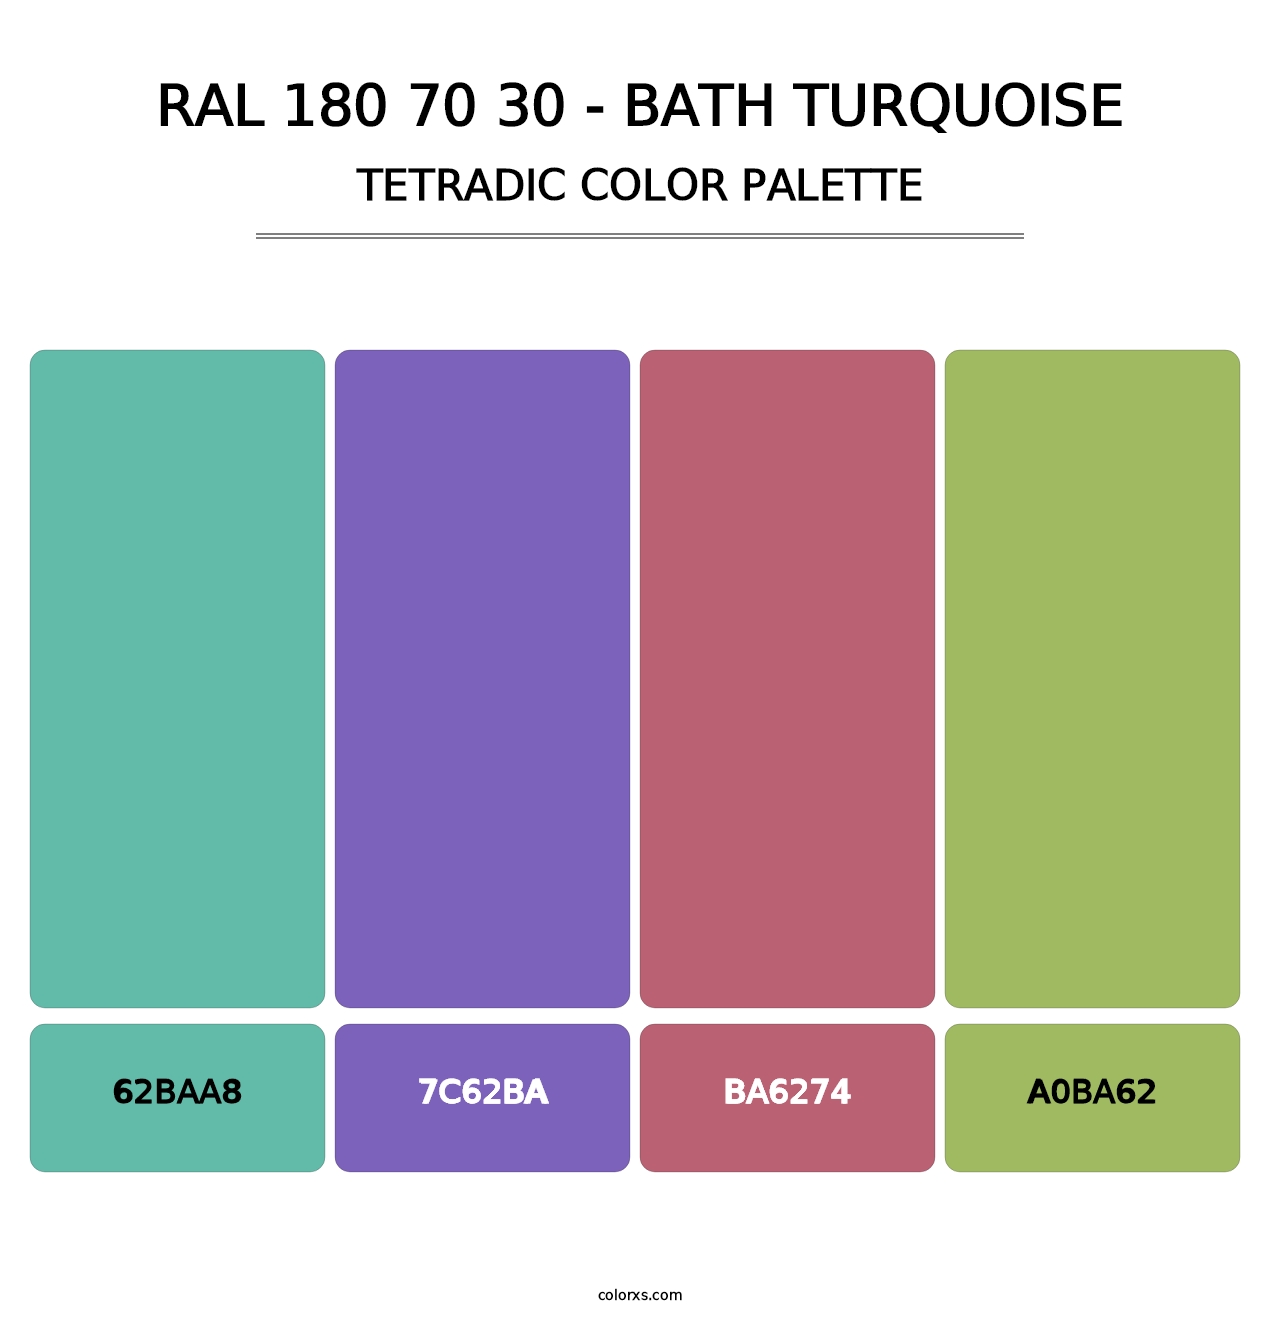 RAL 180 70 30 - Bath Turquoise - Tetradic Color Palette